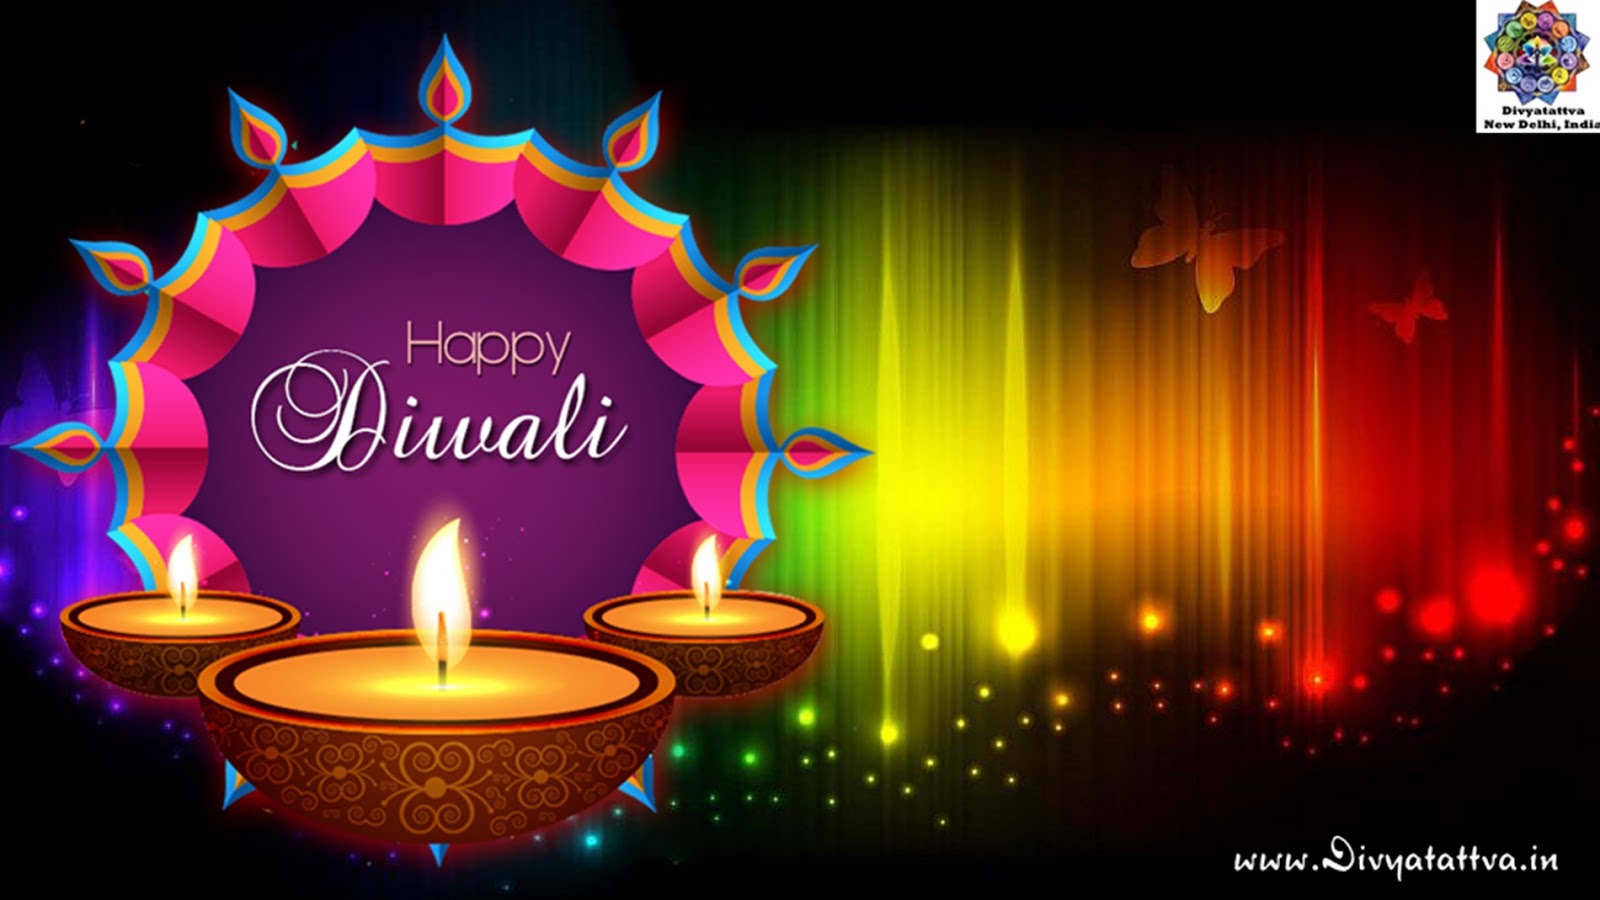 Best diwali celebrations hd wallpapers latest download free latest hd diwali